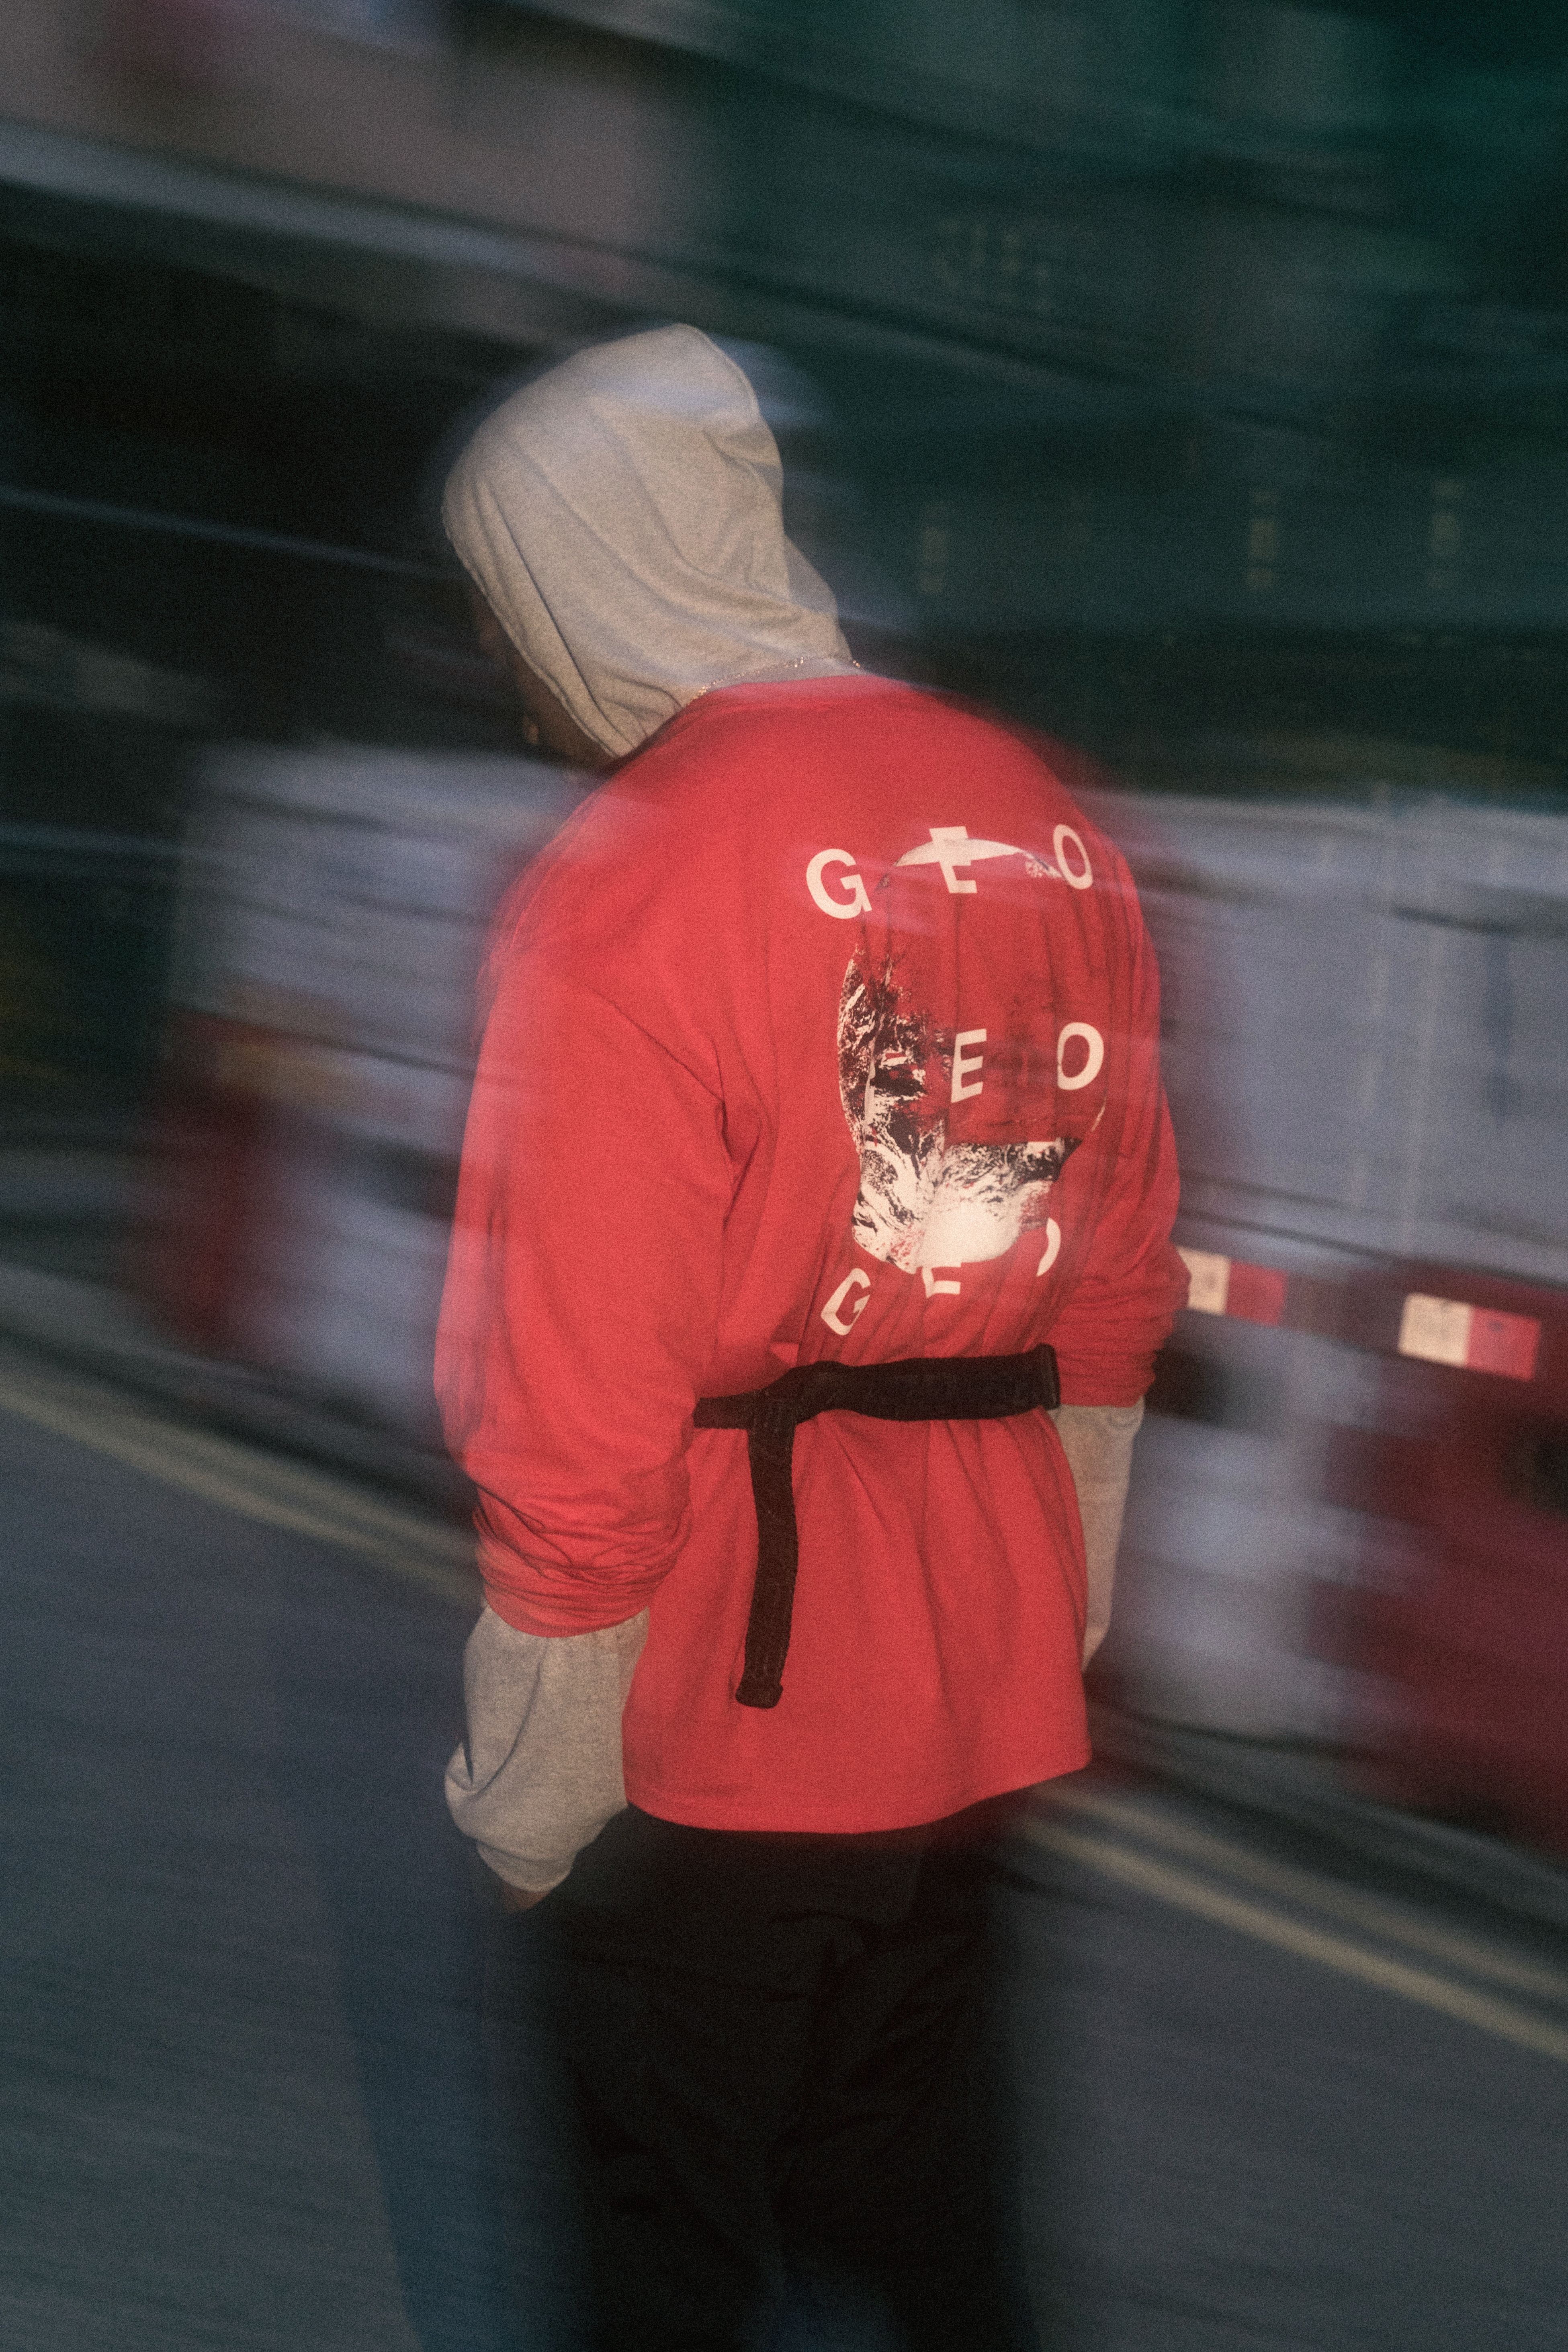 GEO Hyper-Graphical Studio HK Capsule Donda Kanye West Music Geo Owen fashion jackets hoodies graphics text earth space science Hong Kong G E O  2 Chainz Pusha T Big Krit